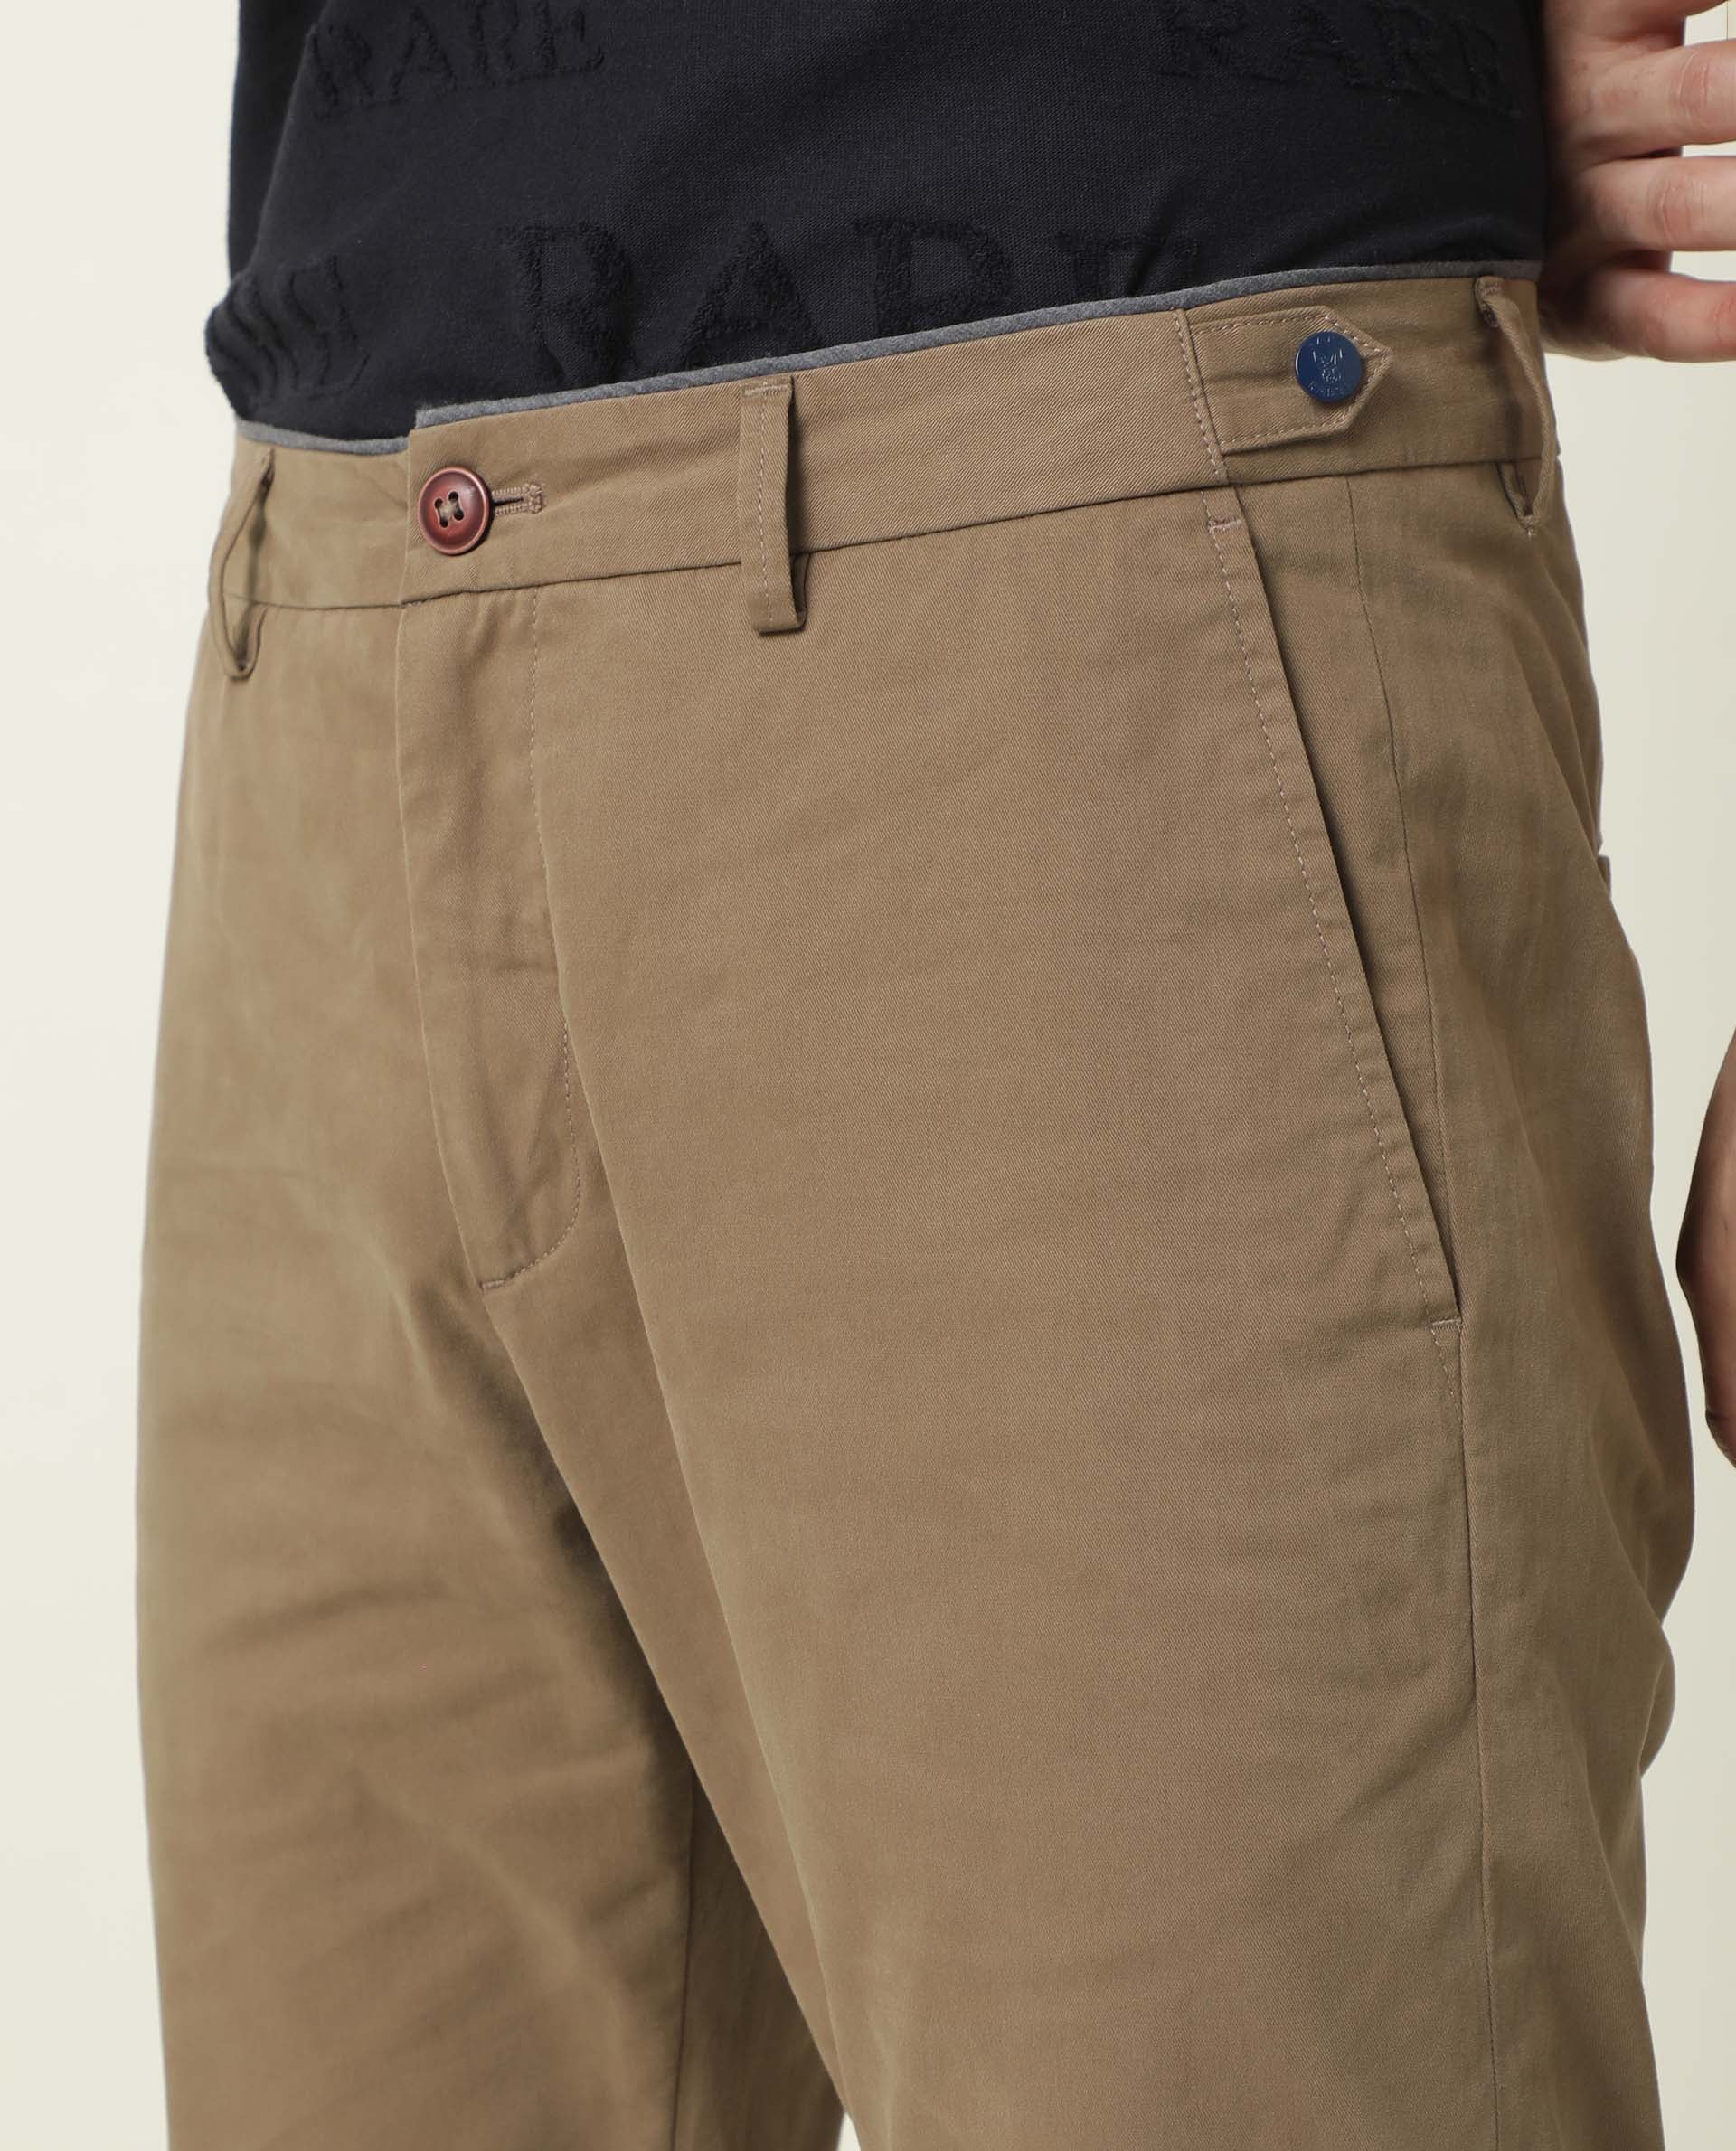 Rare Rabbit Men's Trews-22 Khaki Solid Mid-Rise Regular Fit Trouser